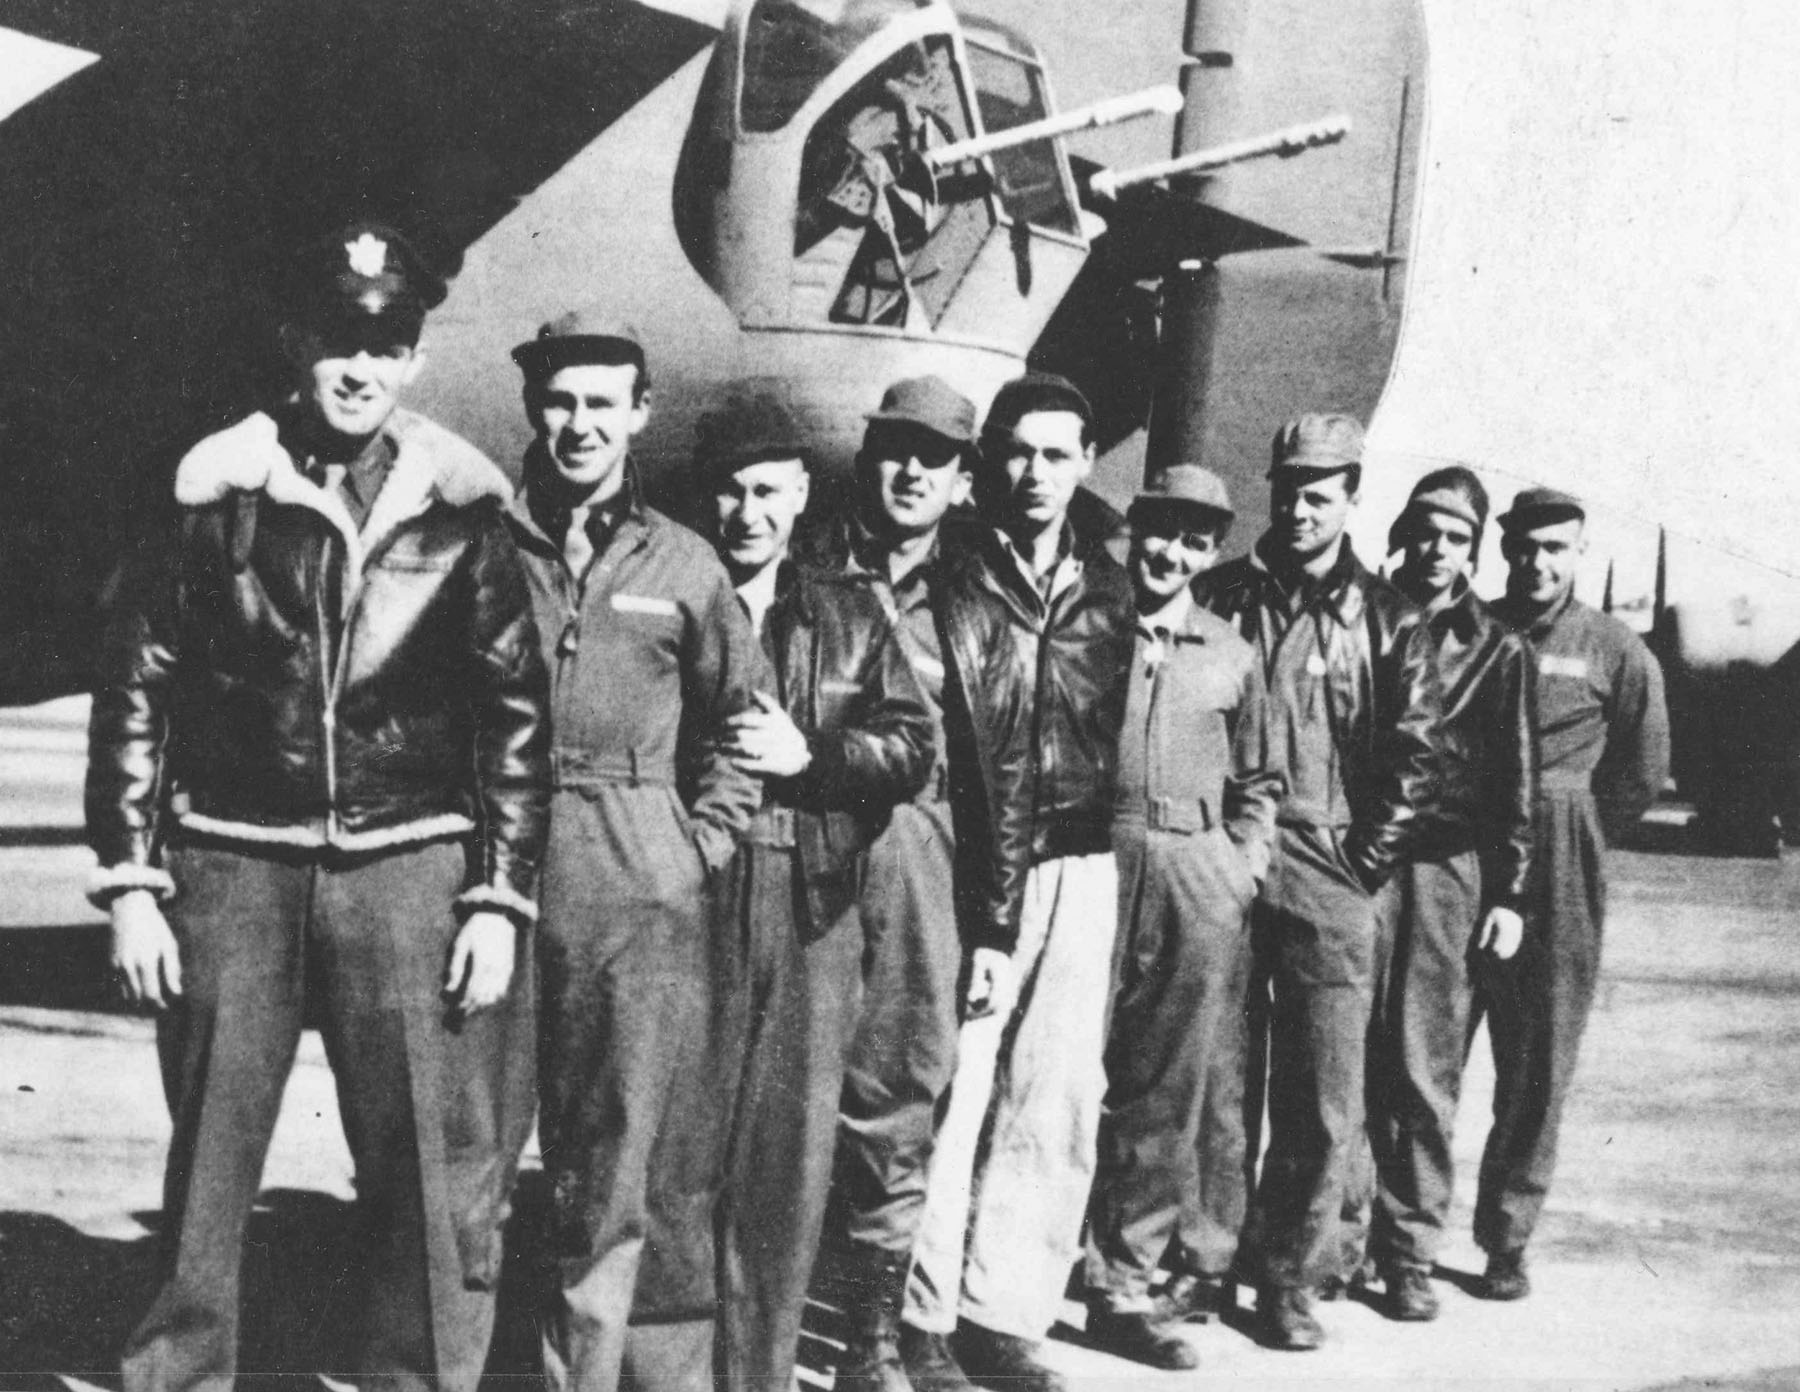 Flight crew of Lady Be Good, from the left: 1Lt. W.J. Hatton, pilot; 2Lt. R.F. Toner, copilot; 2Lt. D.P. Hays, navigator; 2Lt. J.S. Woravka, bombardier; TSgt. H.J. Ripslinger, engineer; TSgt. R.E. LaMotte, radio operator; SSgt. G.E. Shelly, gunner; SSgt. V.L. Moore, gunner; and SSgt. S.E. Adams, gunner. (U.S. Air Force)